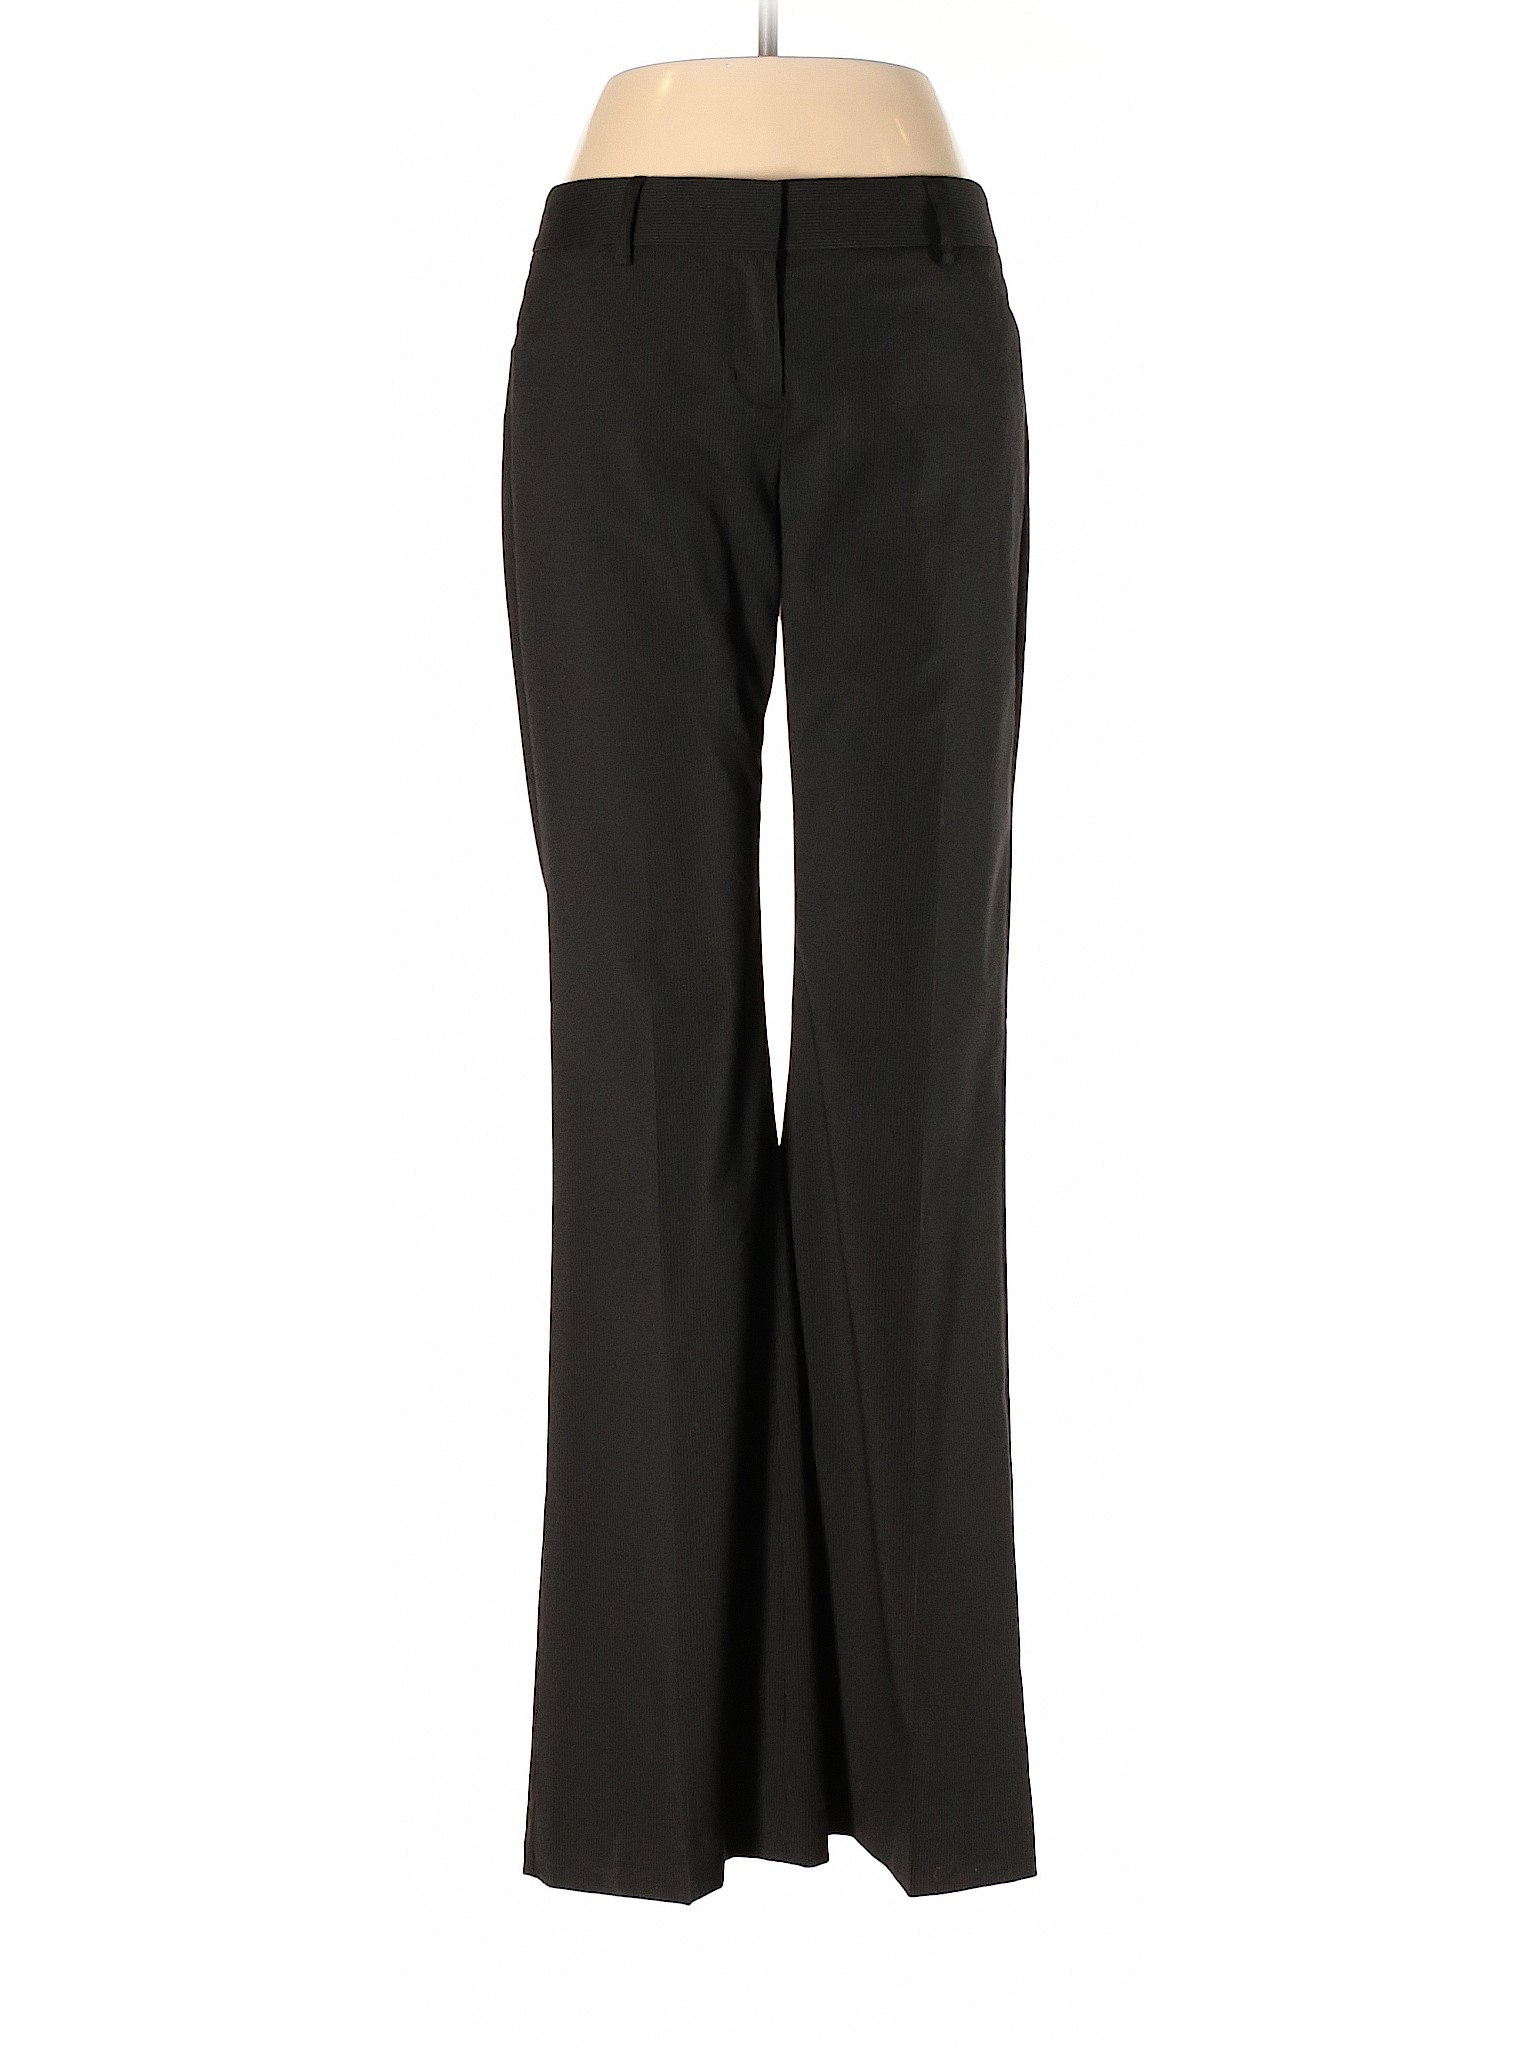 Express Women Black Dress Pants 2 | eBay